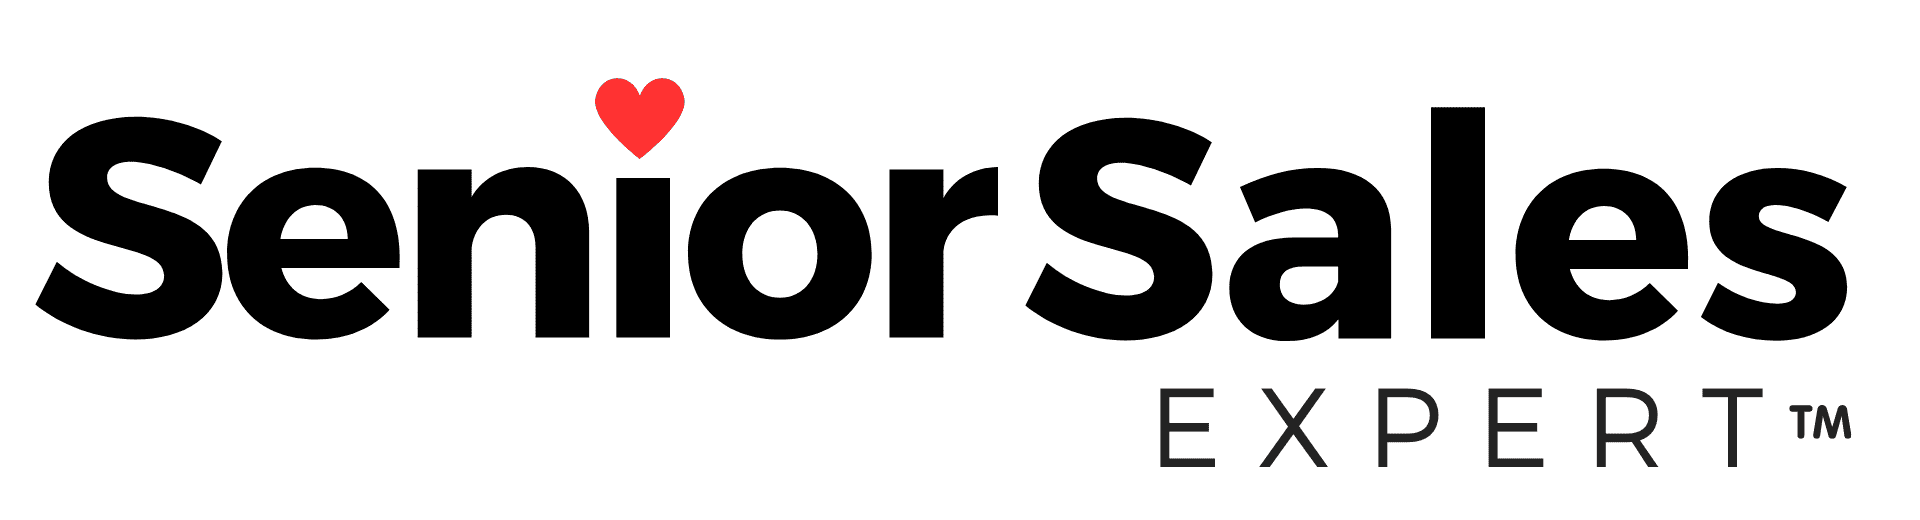 Senior Sales Expert logo